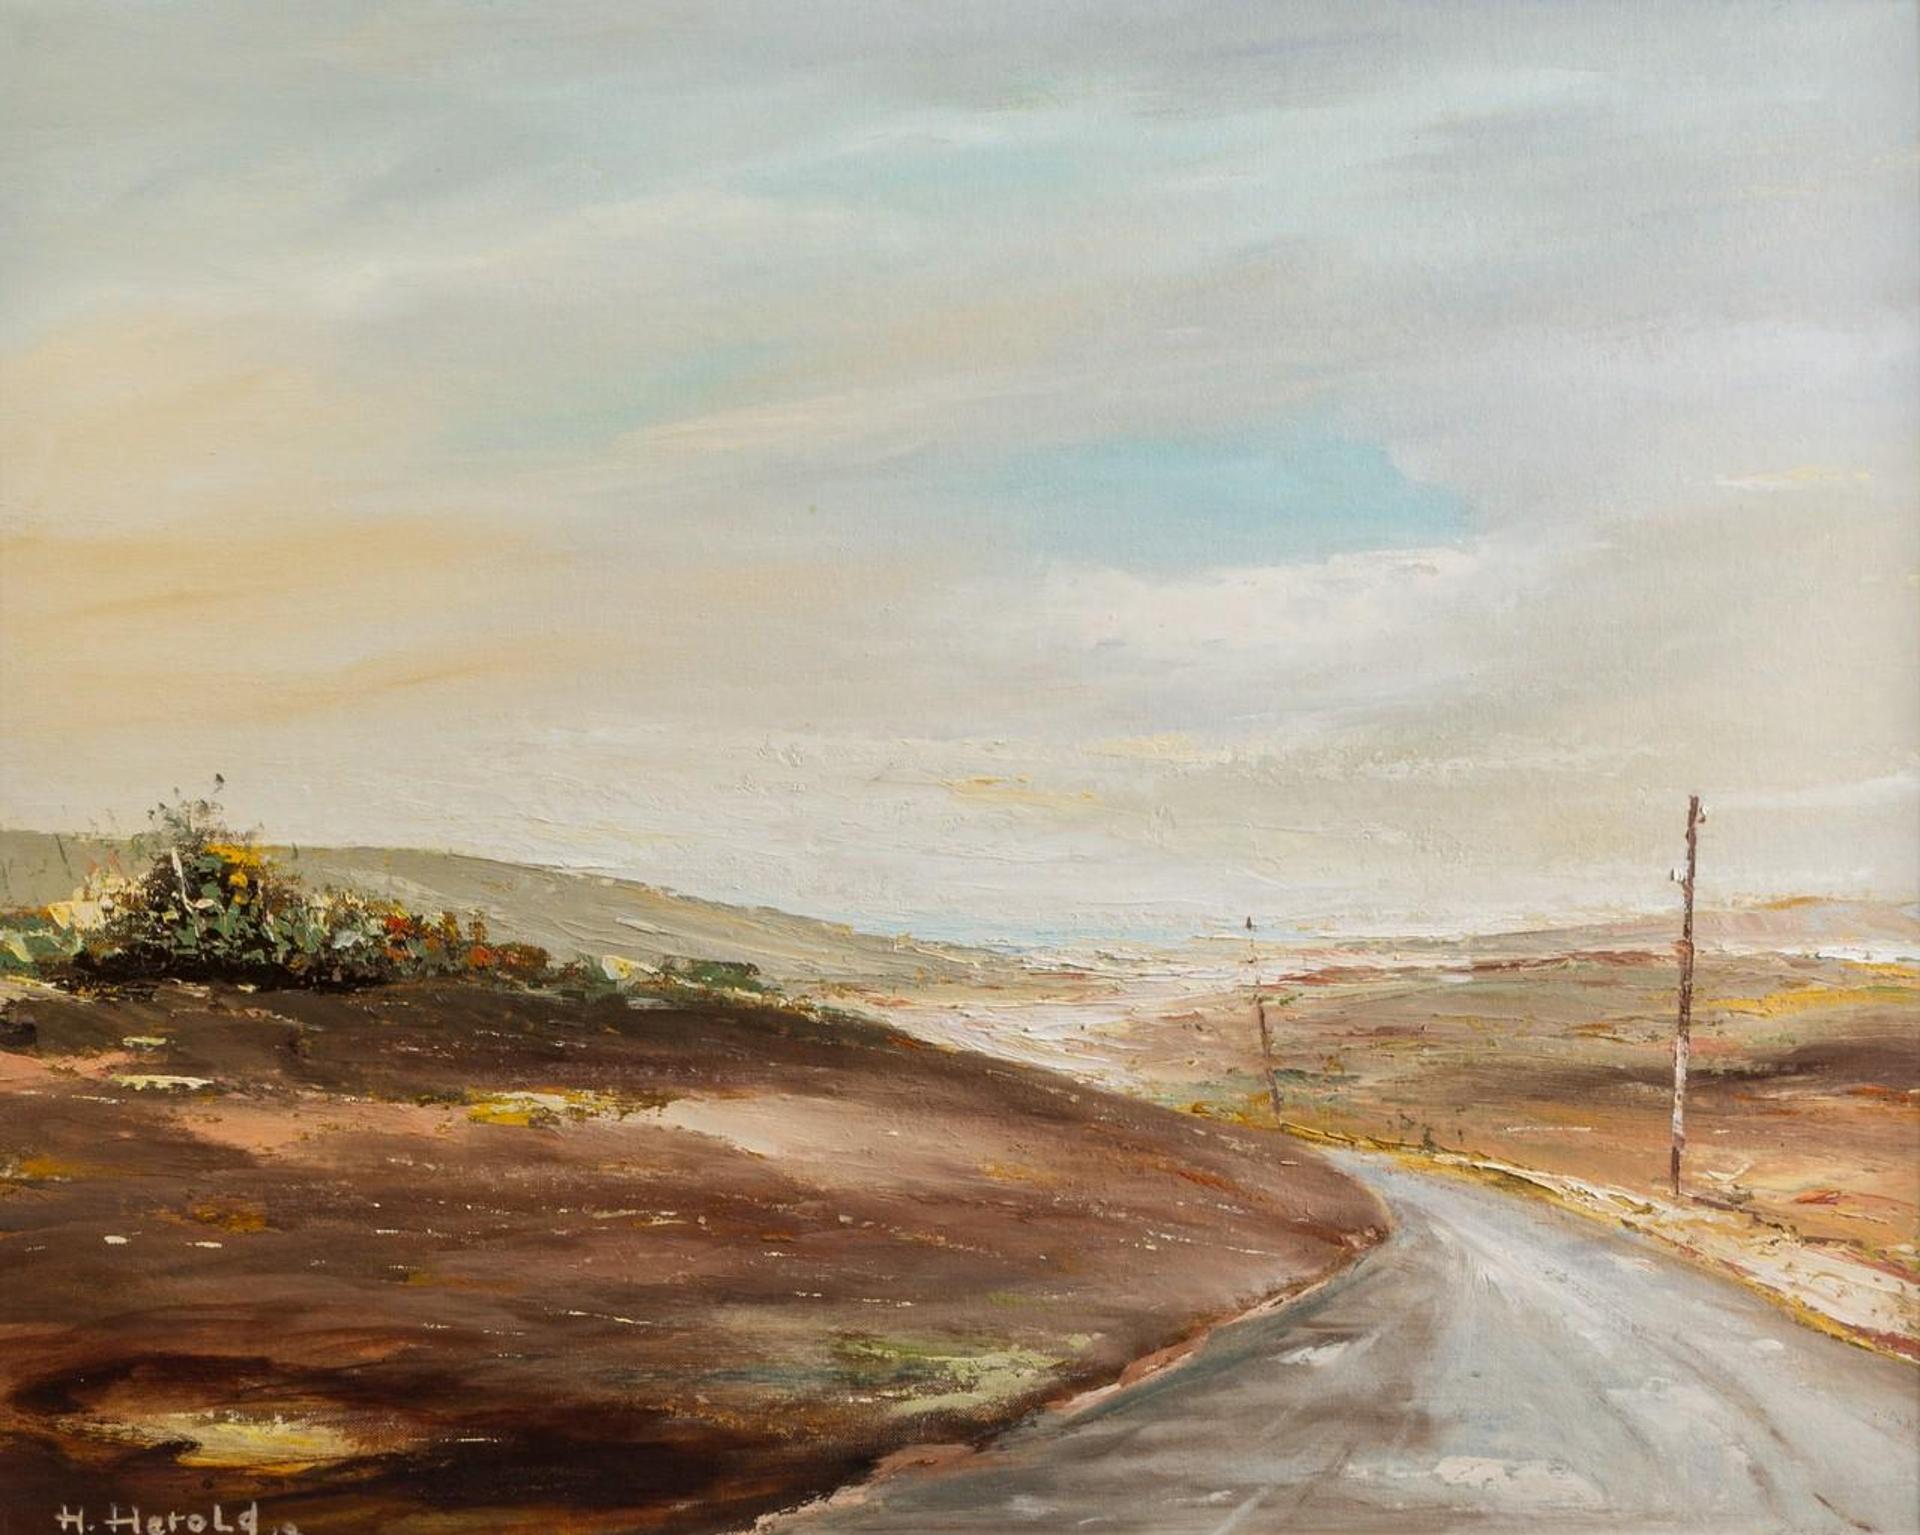 Hans Herold (1925-2011) - Road through a Landscape